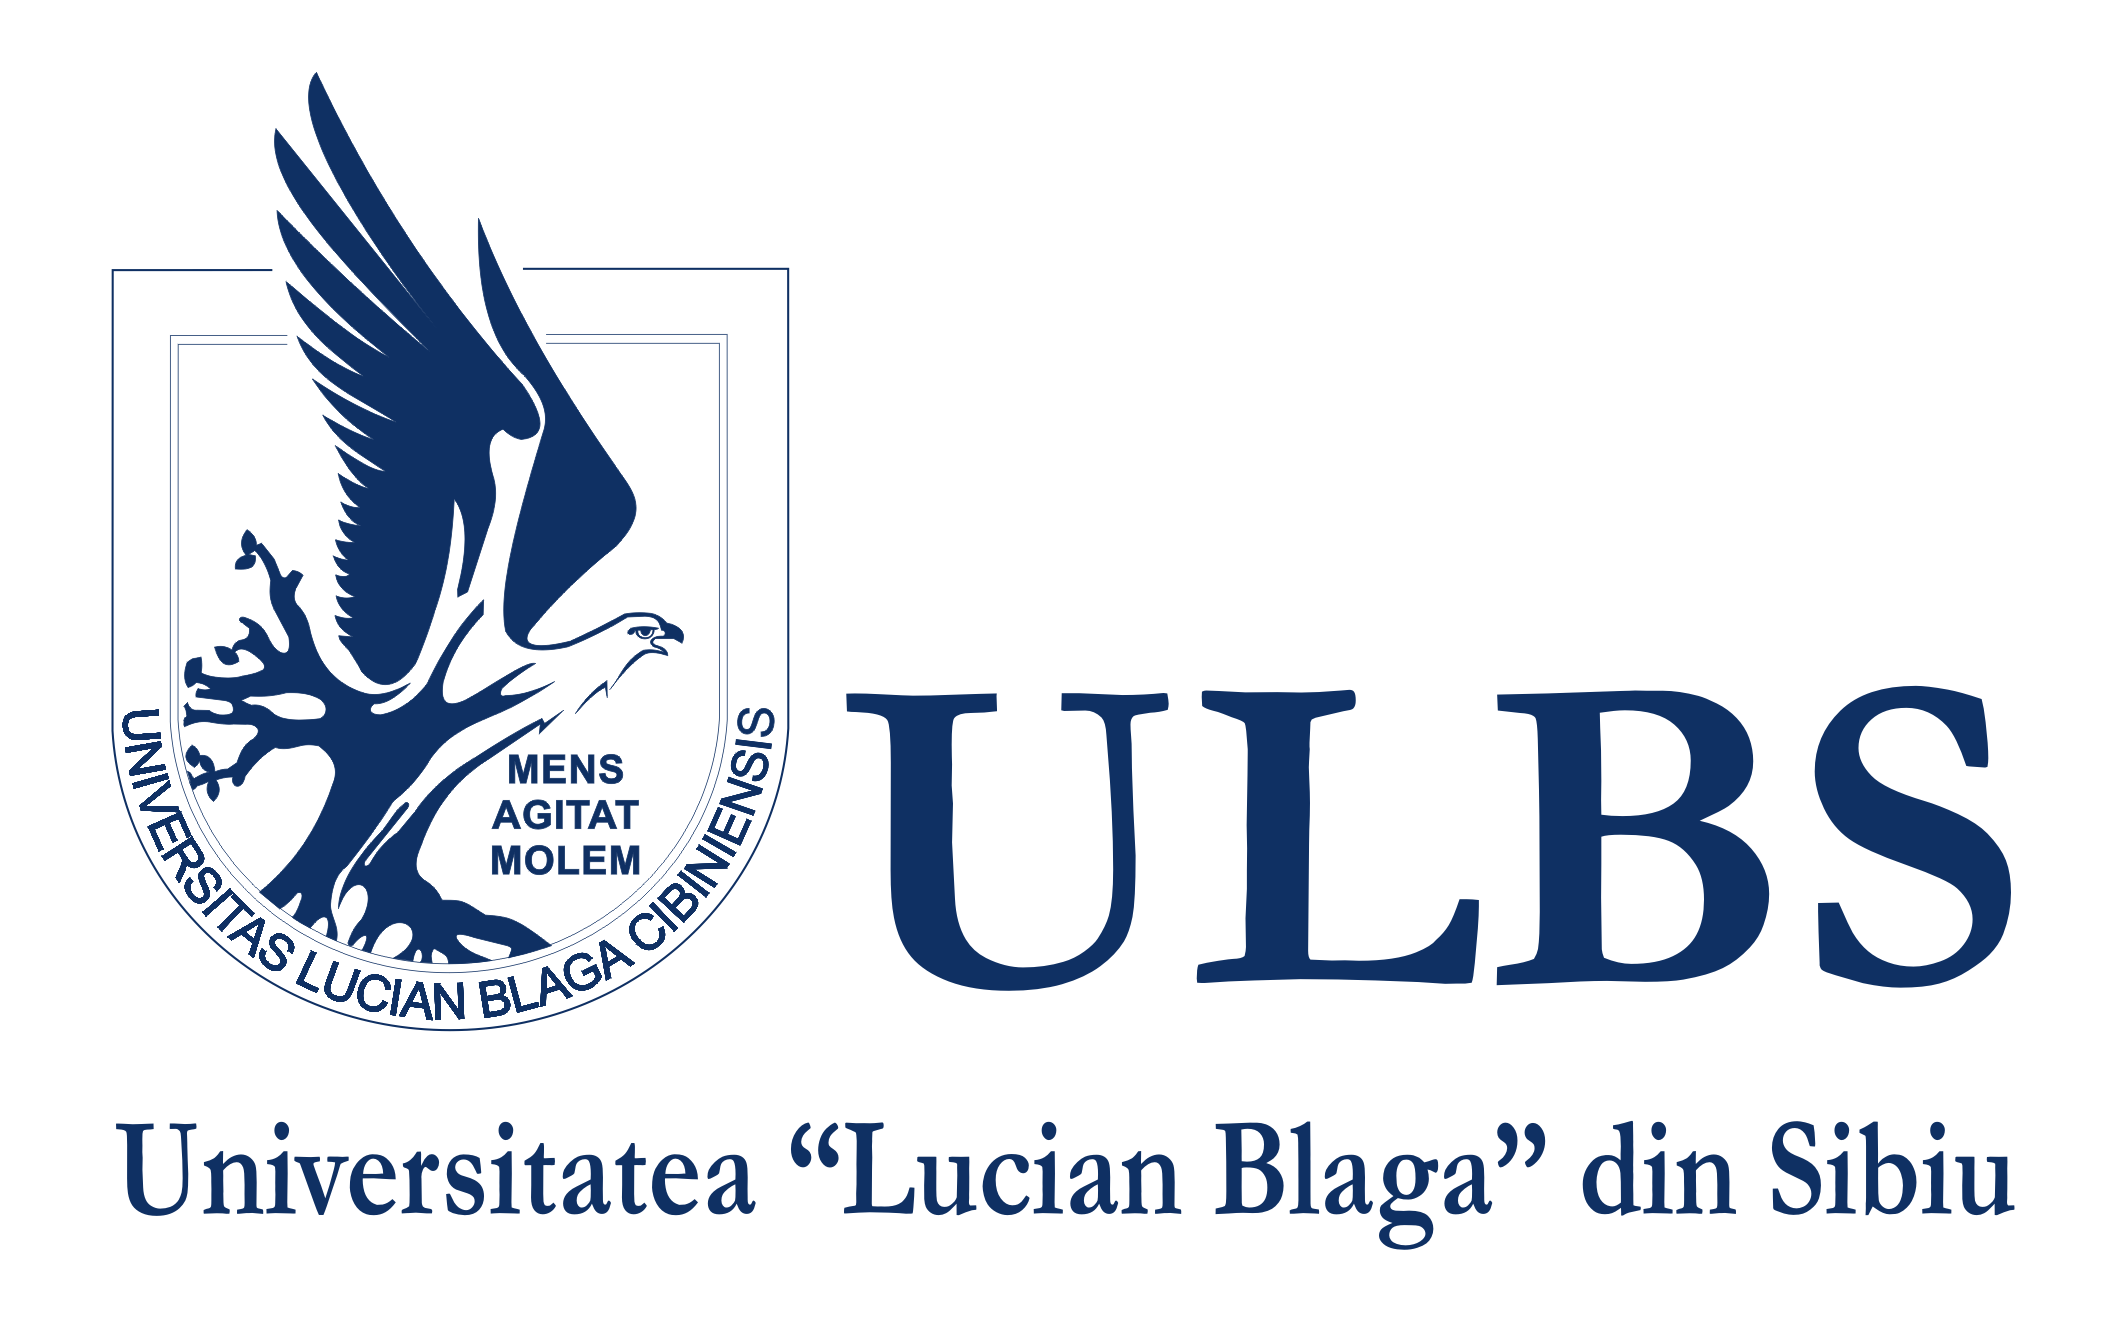 Lucian Blaga University of Sibiu